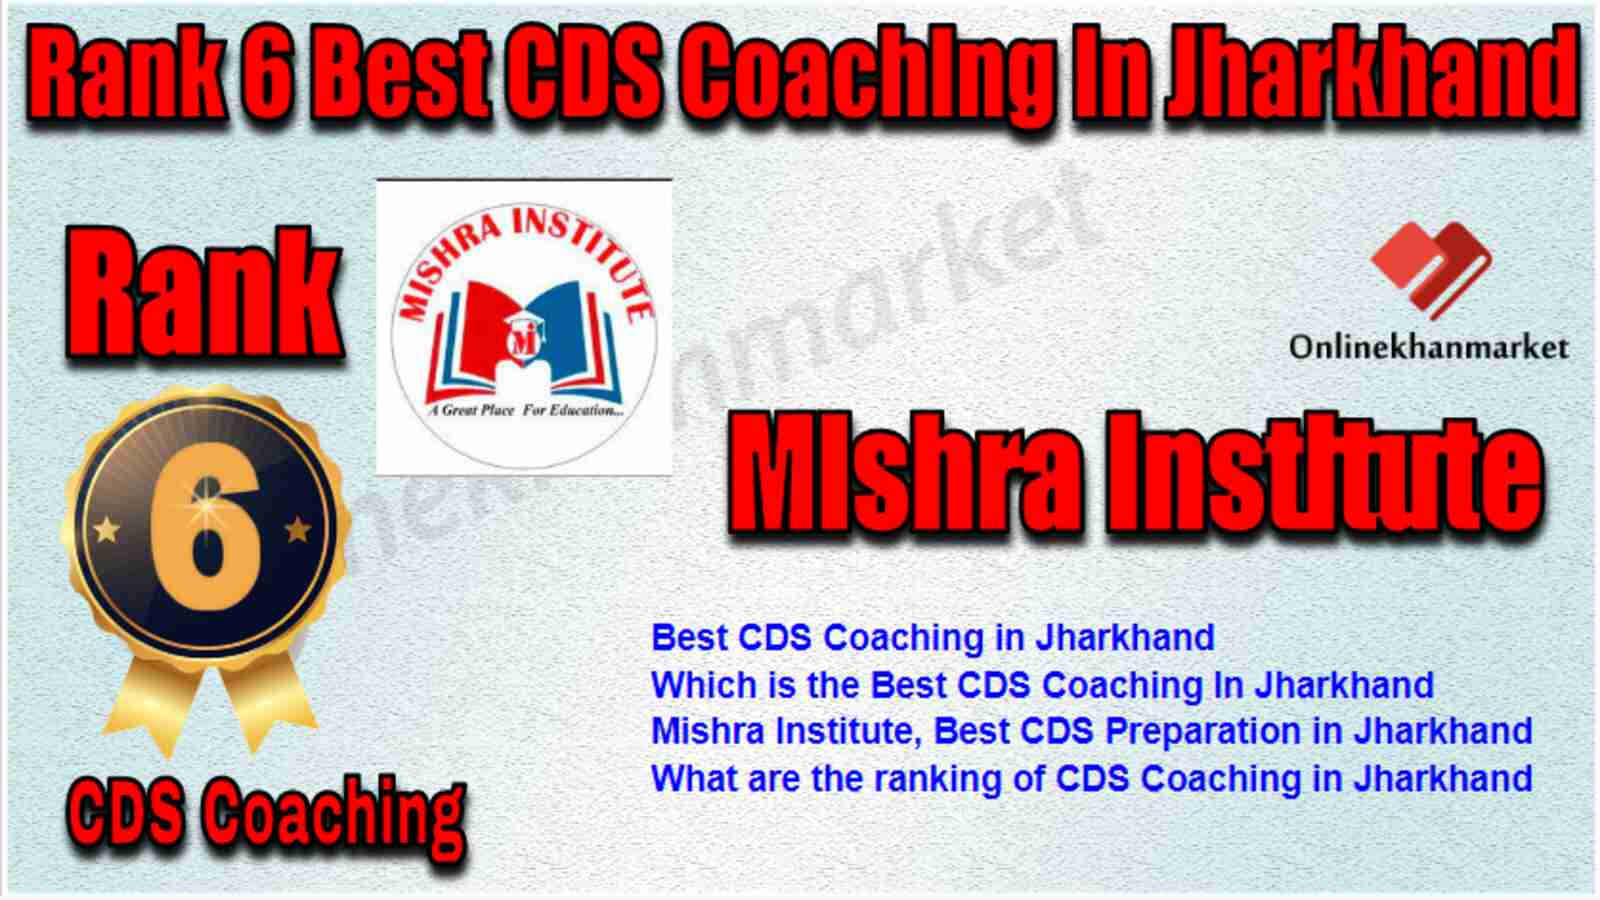 Rank 6 Best CDS Coaching in Jharkhand